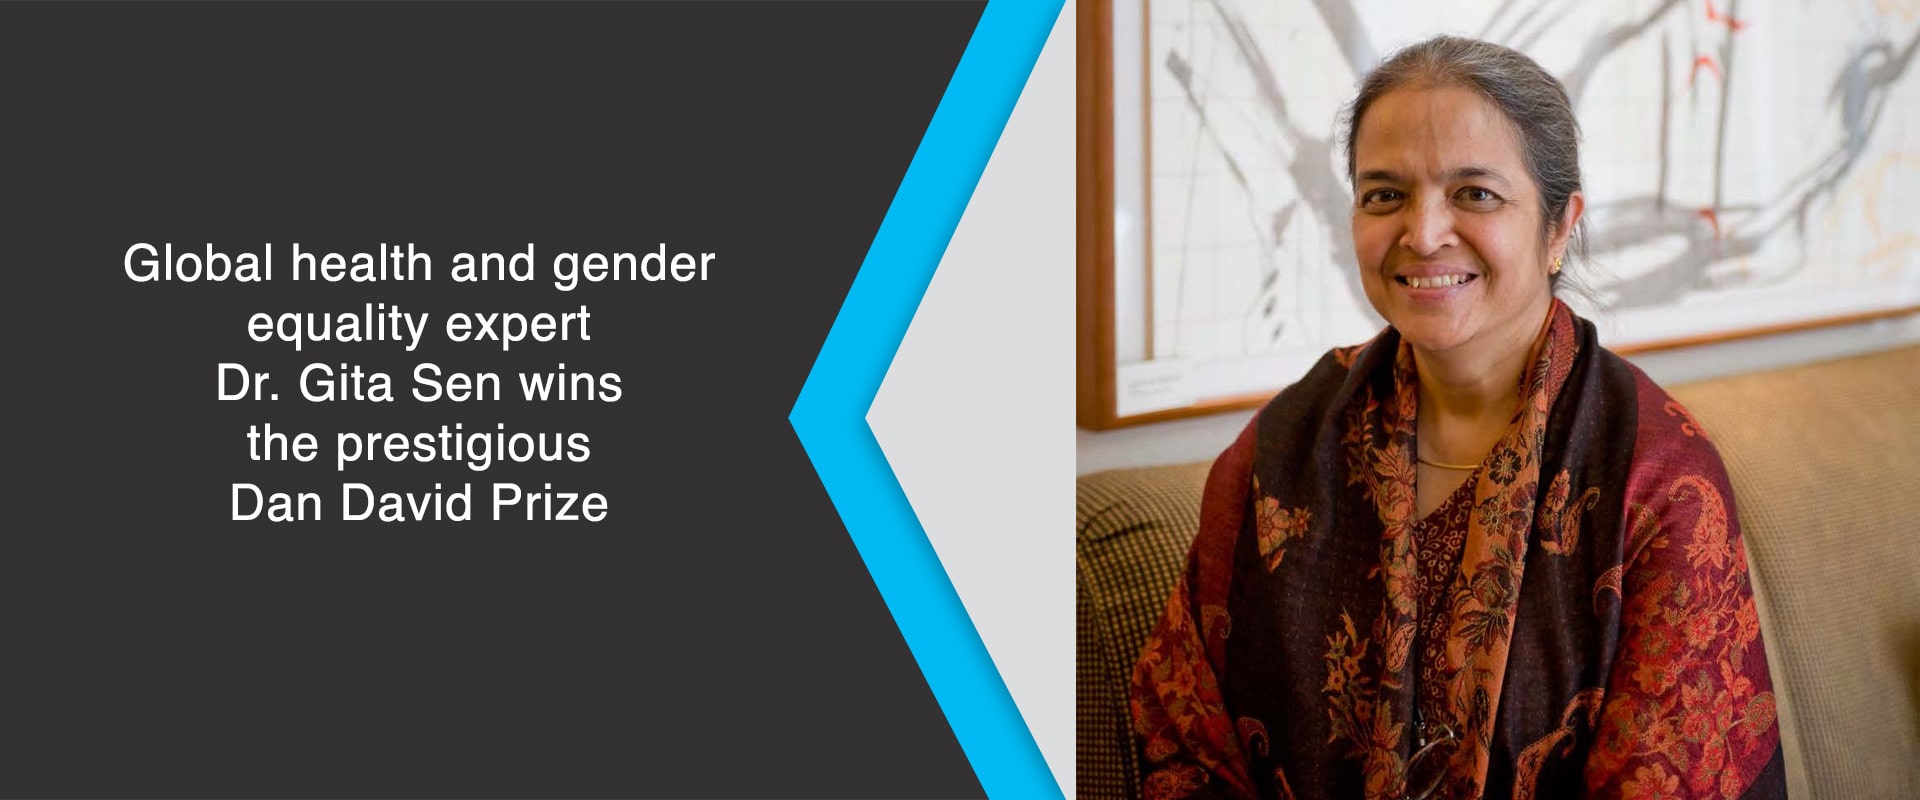 Global health and gender equality expert Dr. Gita Sen wins the prestigious Dan David Prize